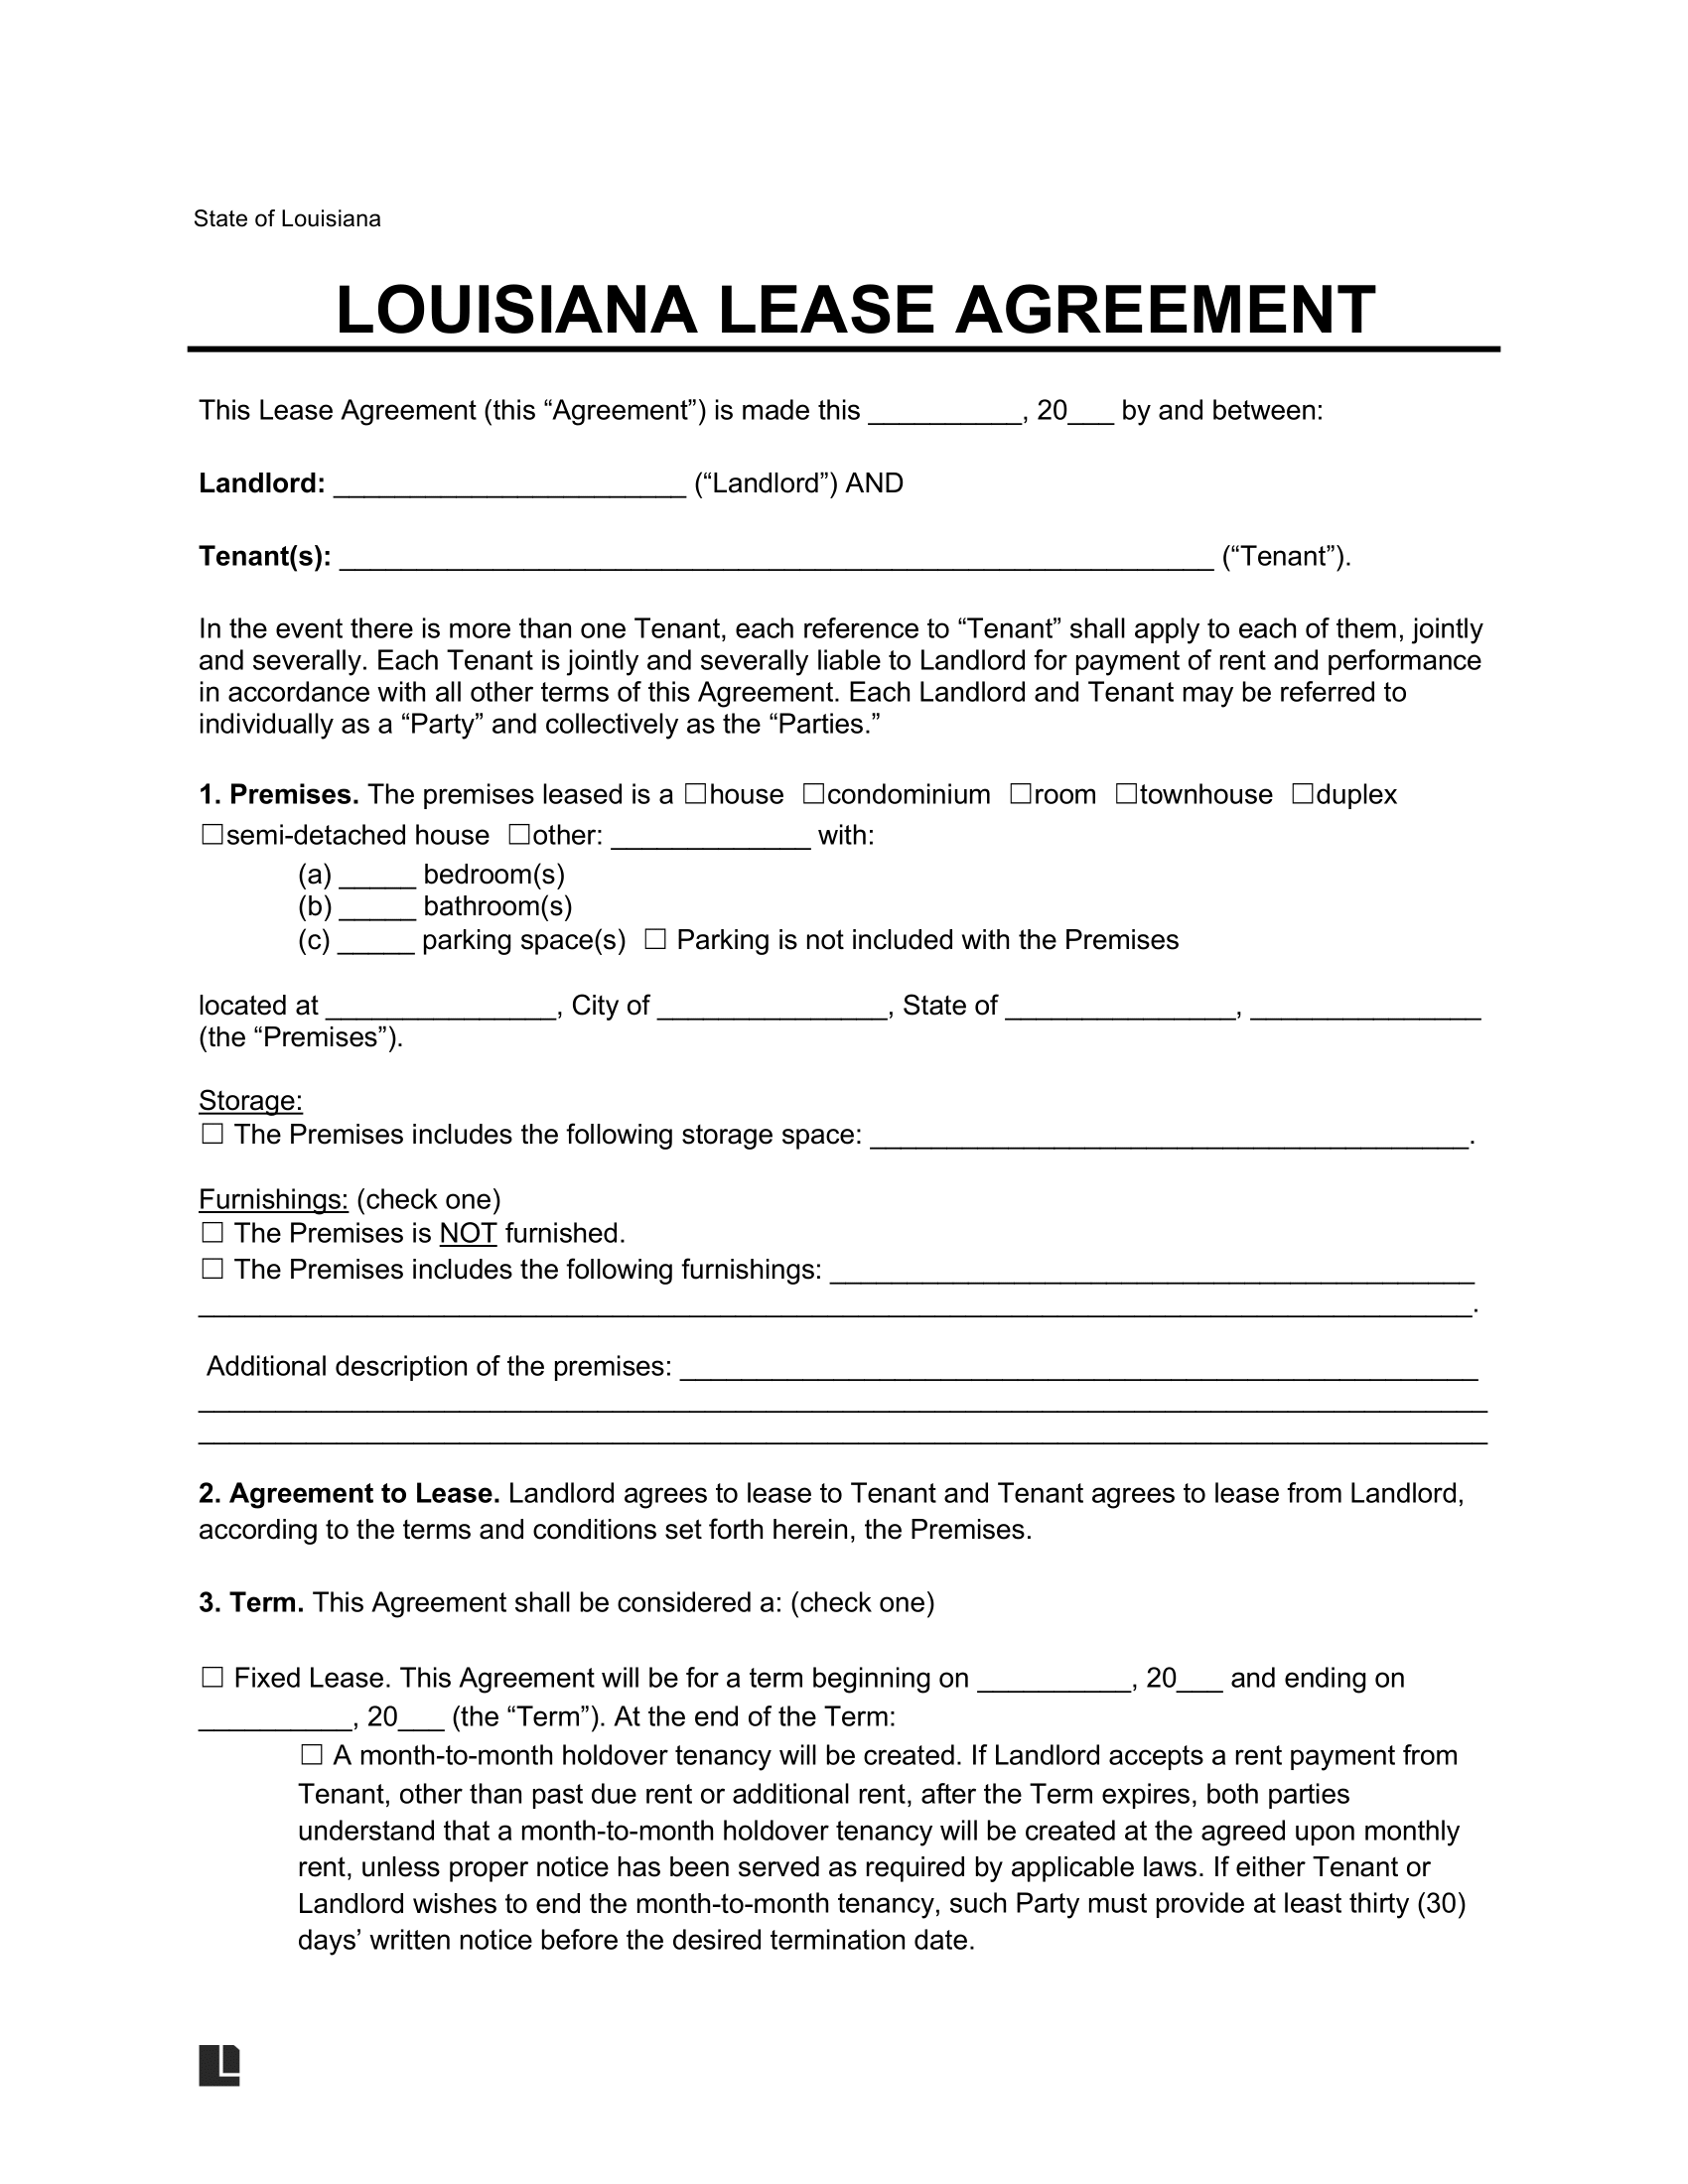 louisiana lease agreement